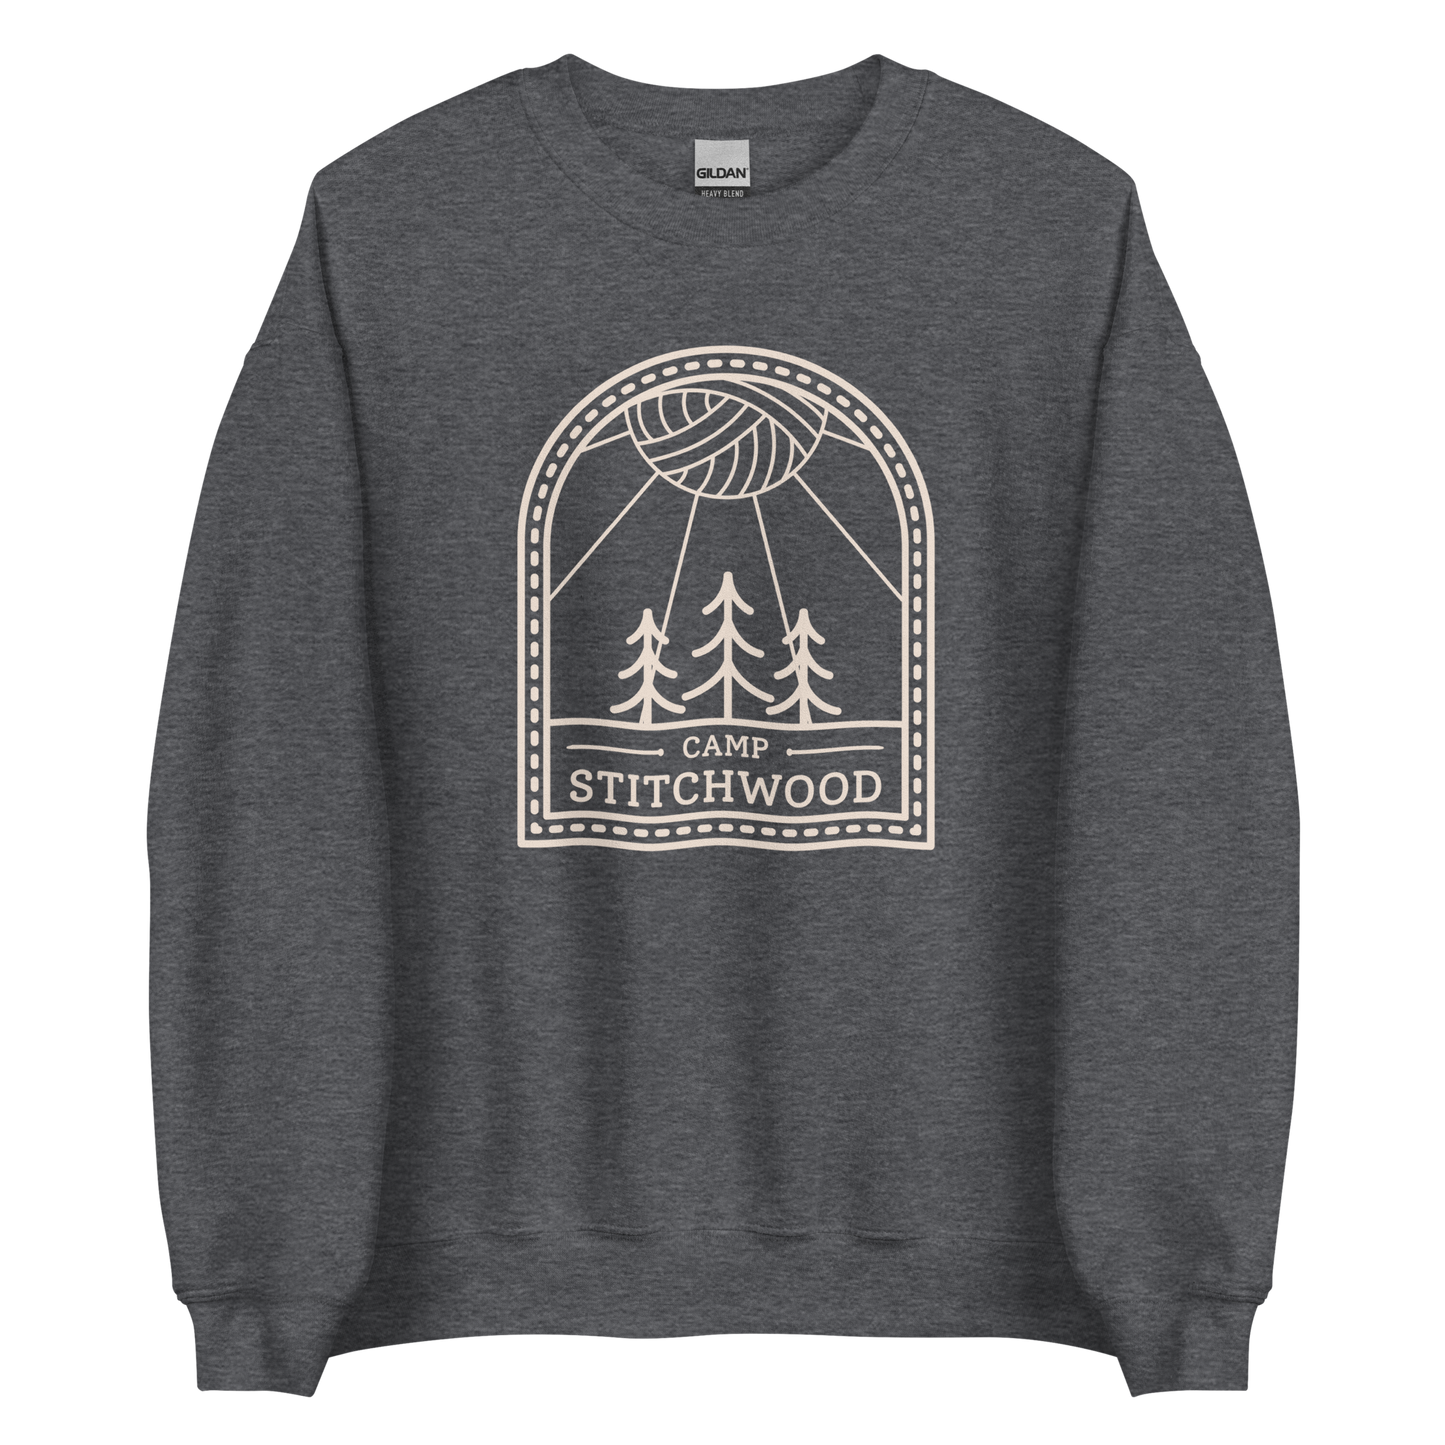 Camp Stitchwood Tall Logo Sweatshirt, Unisex